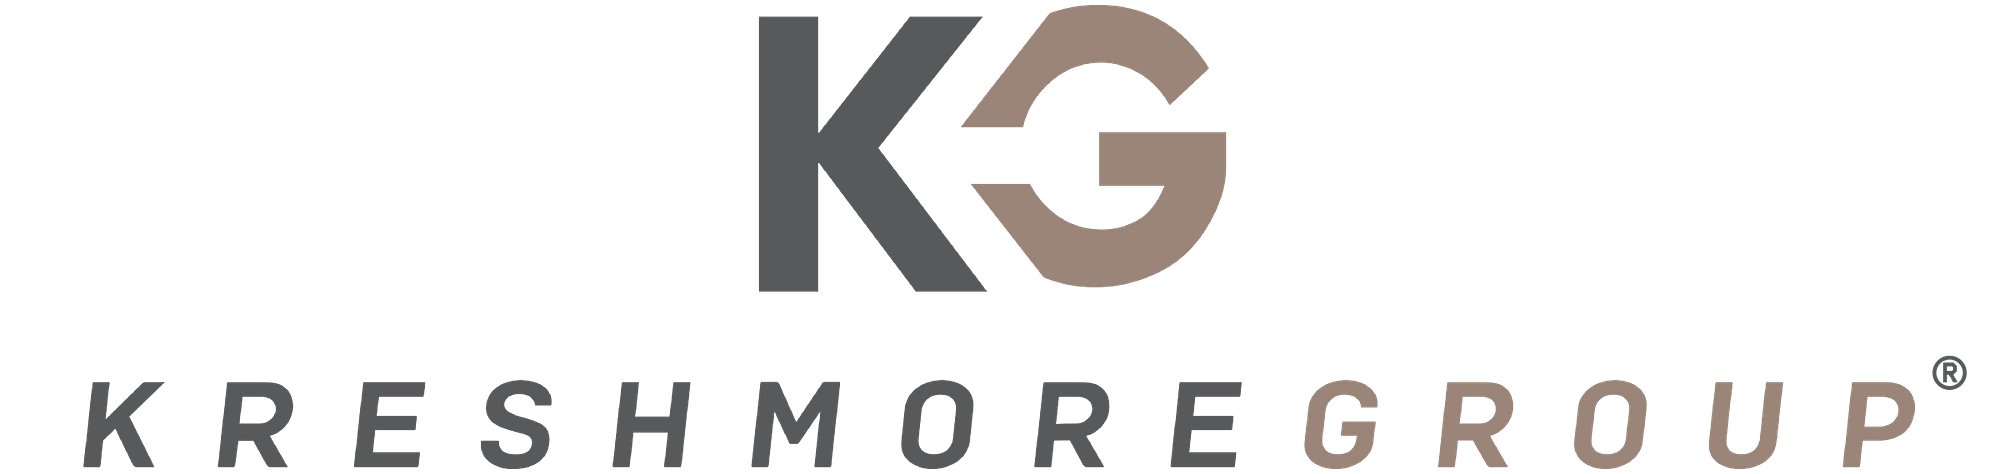 Kreshmore Group | Restructuring, Mergers, & Acquisitions Uncat